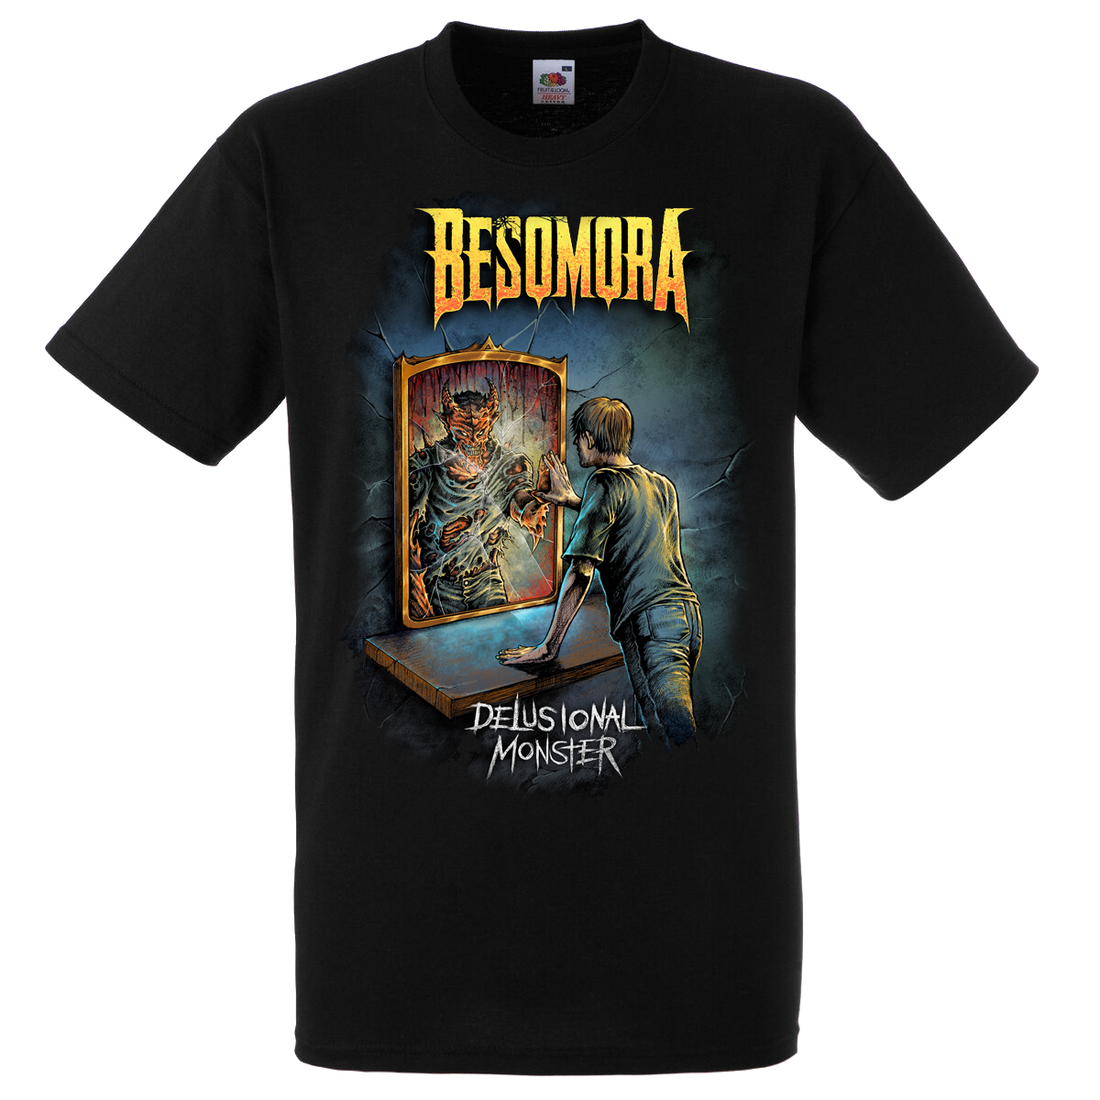 Besomora - 'Delusional Monster' T-Shirt